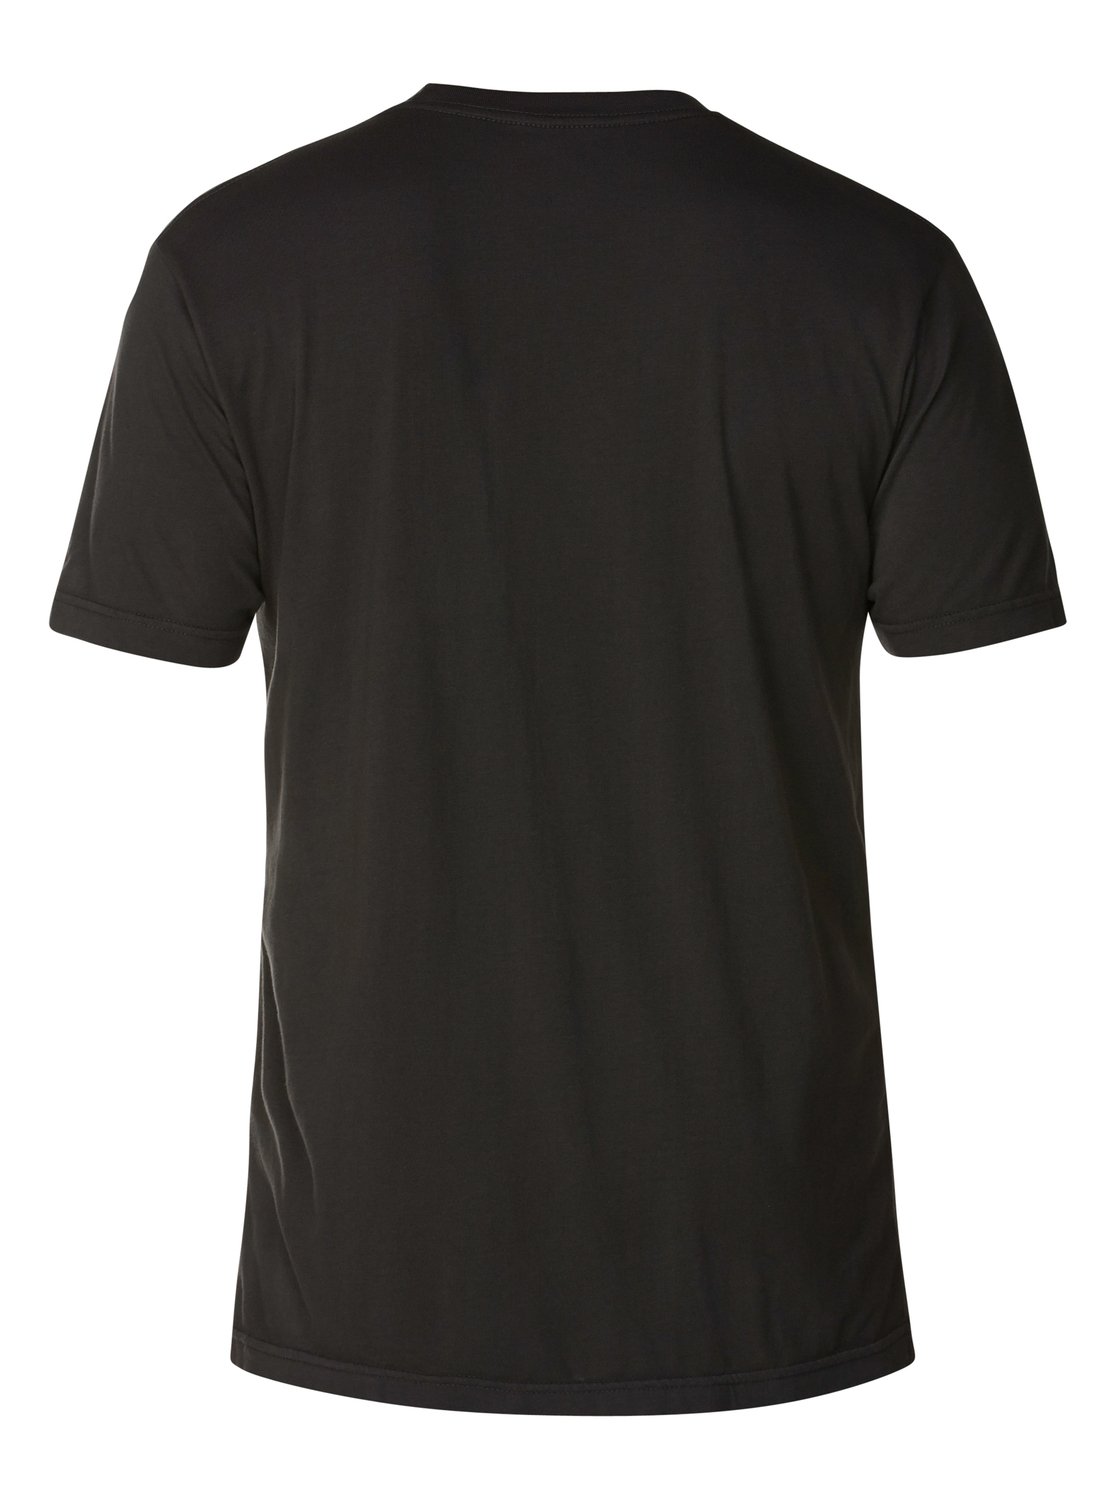 Ripples Slim Fit T-Shirt AQYZT03052 | Quiksilver